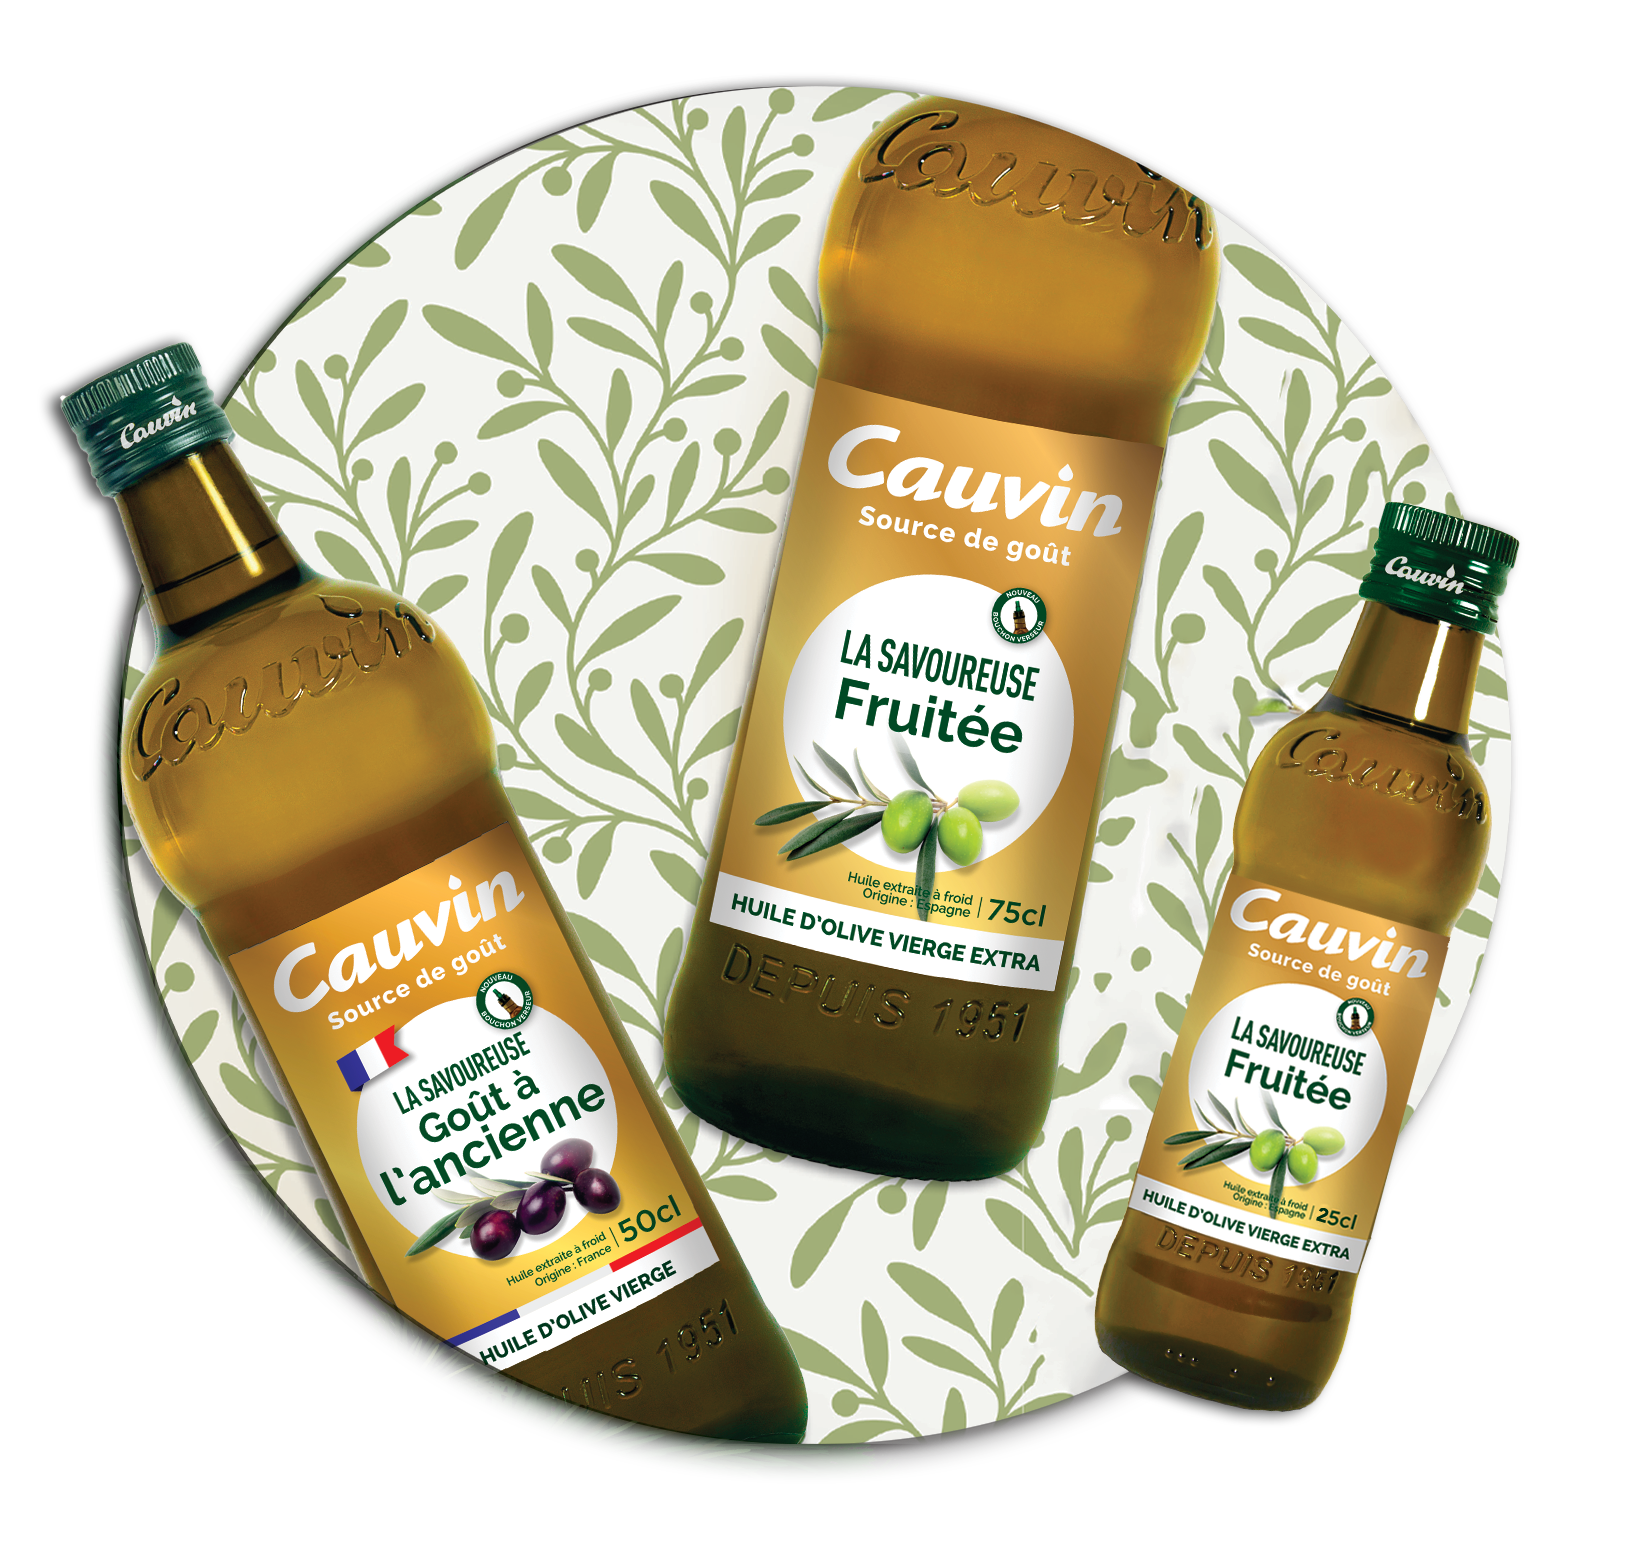 Die Reihe “SAVOUREUSES”: 100 % Olivengeschmack